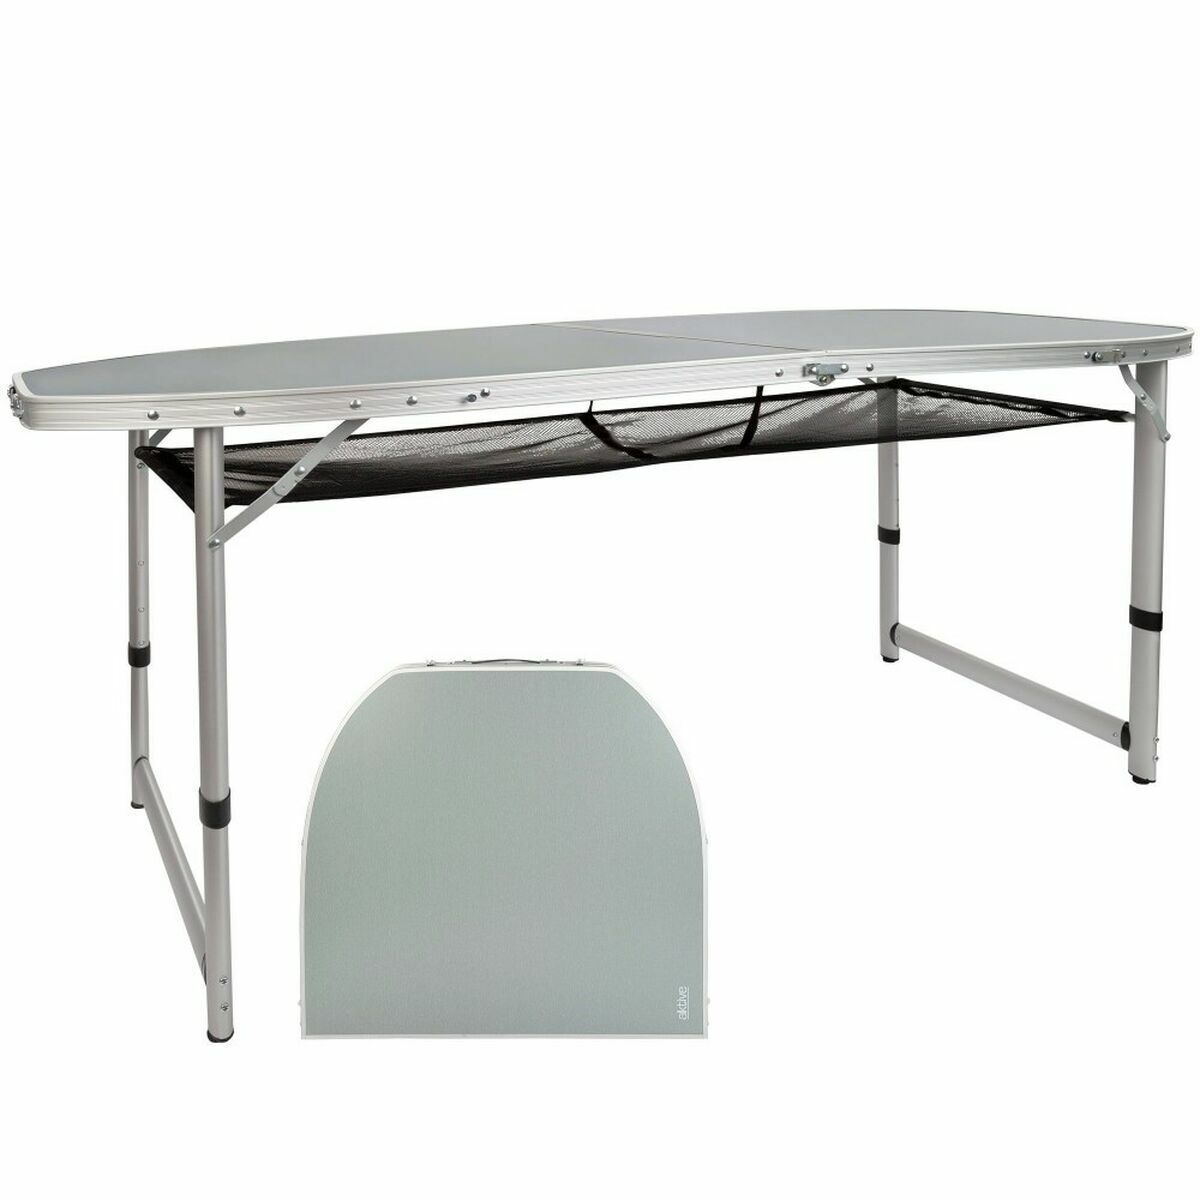 Folding Table Aktive 149 x 80 x 59 cm Camping